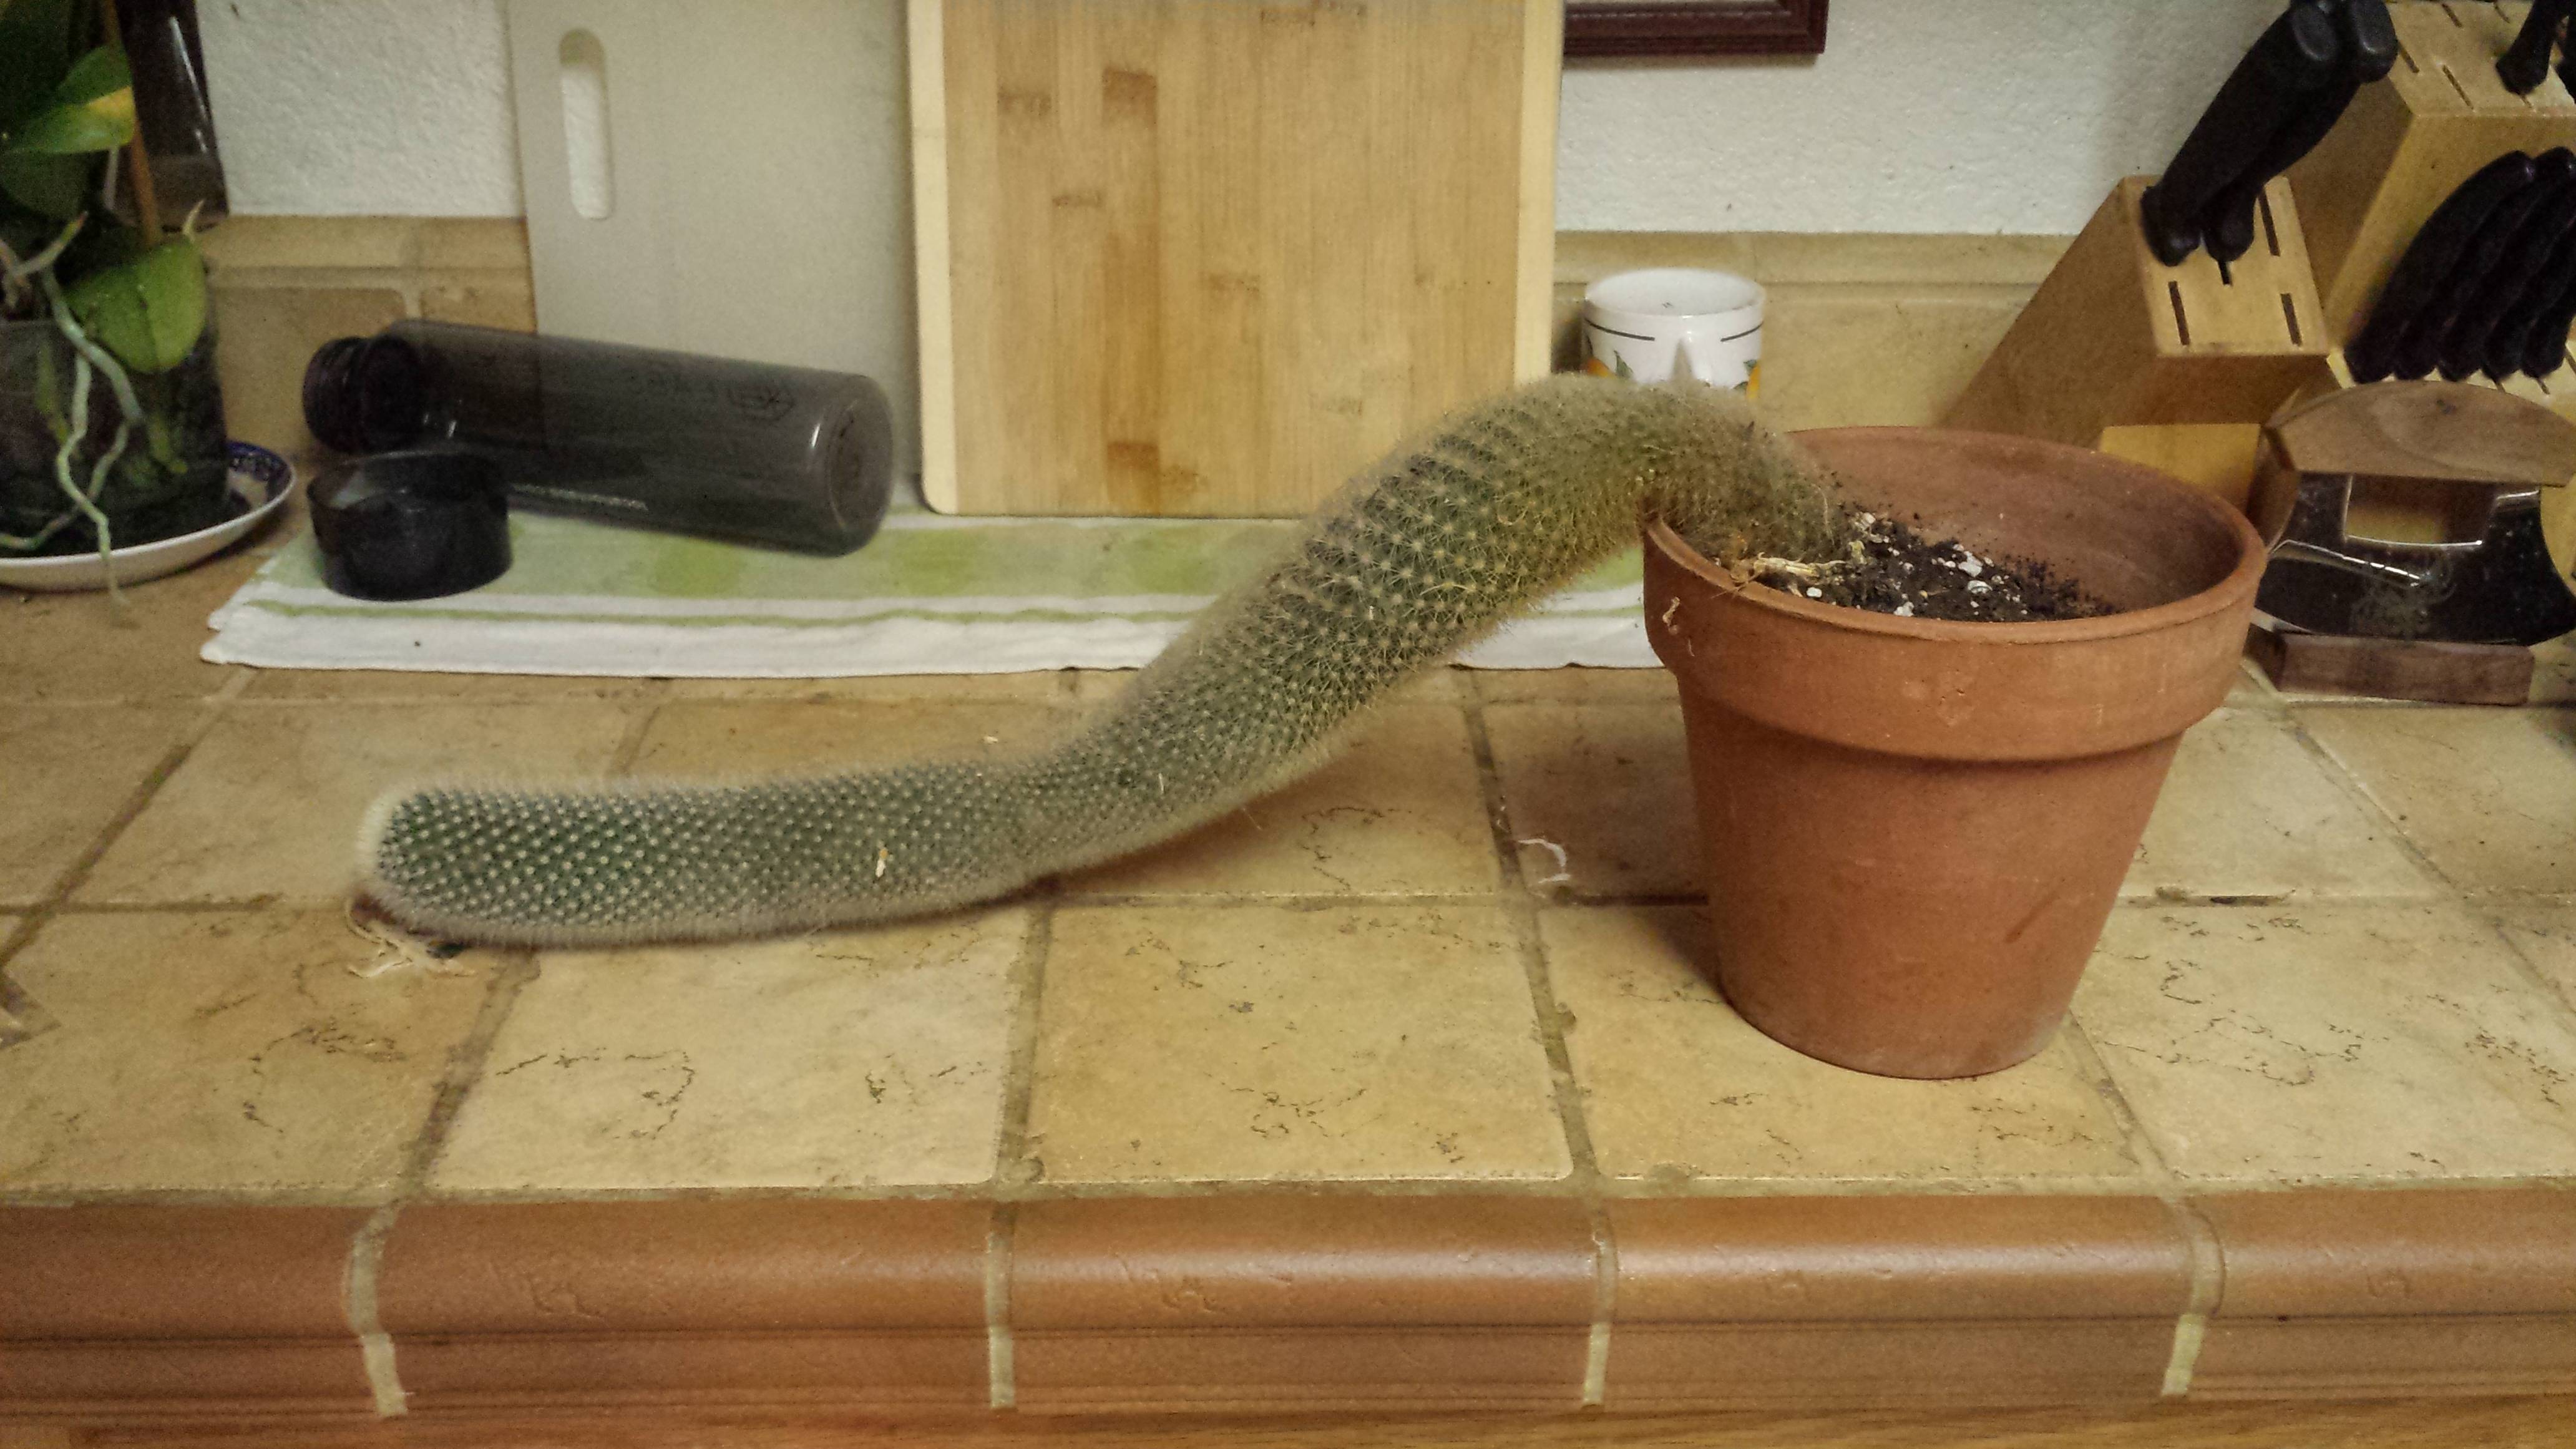 My cactus decided to grow sideways - Imgur